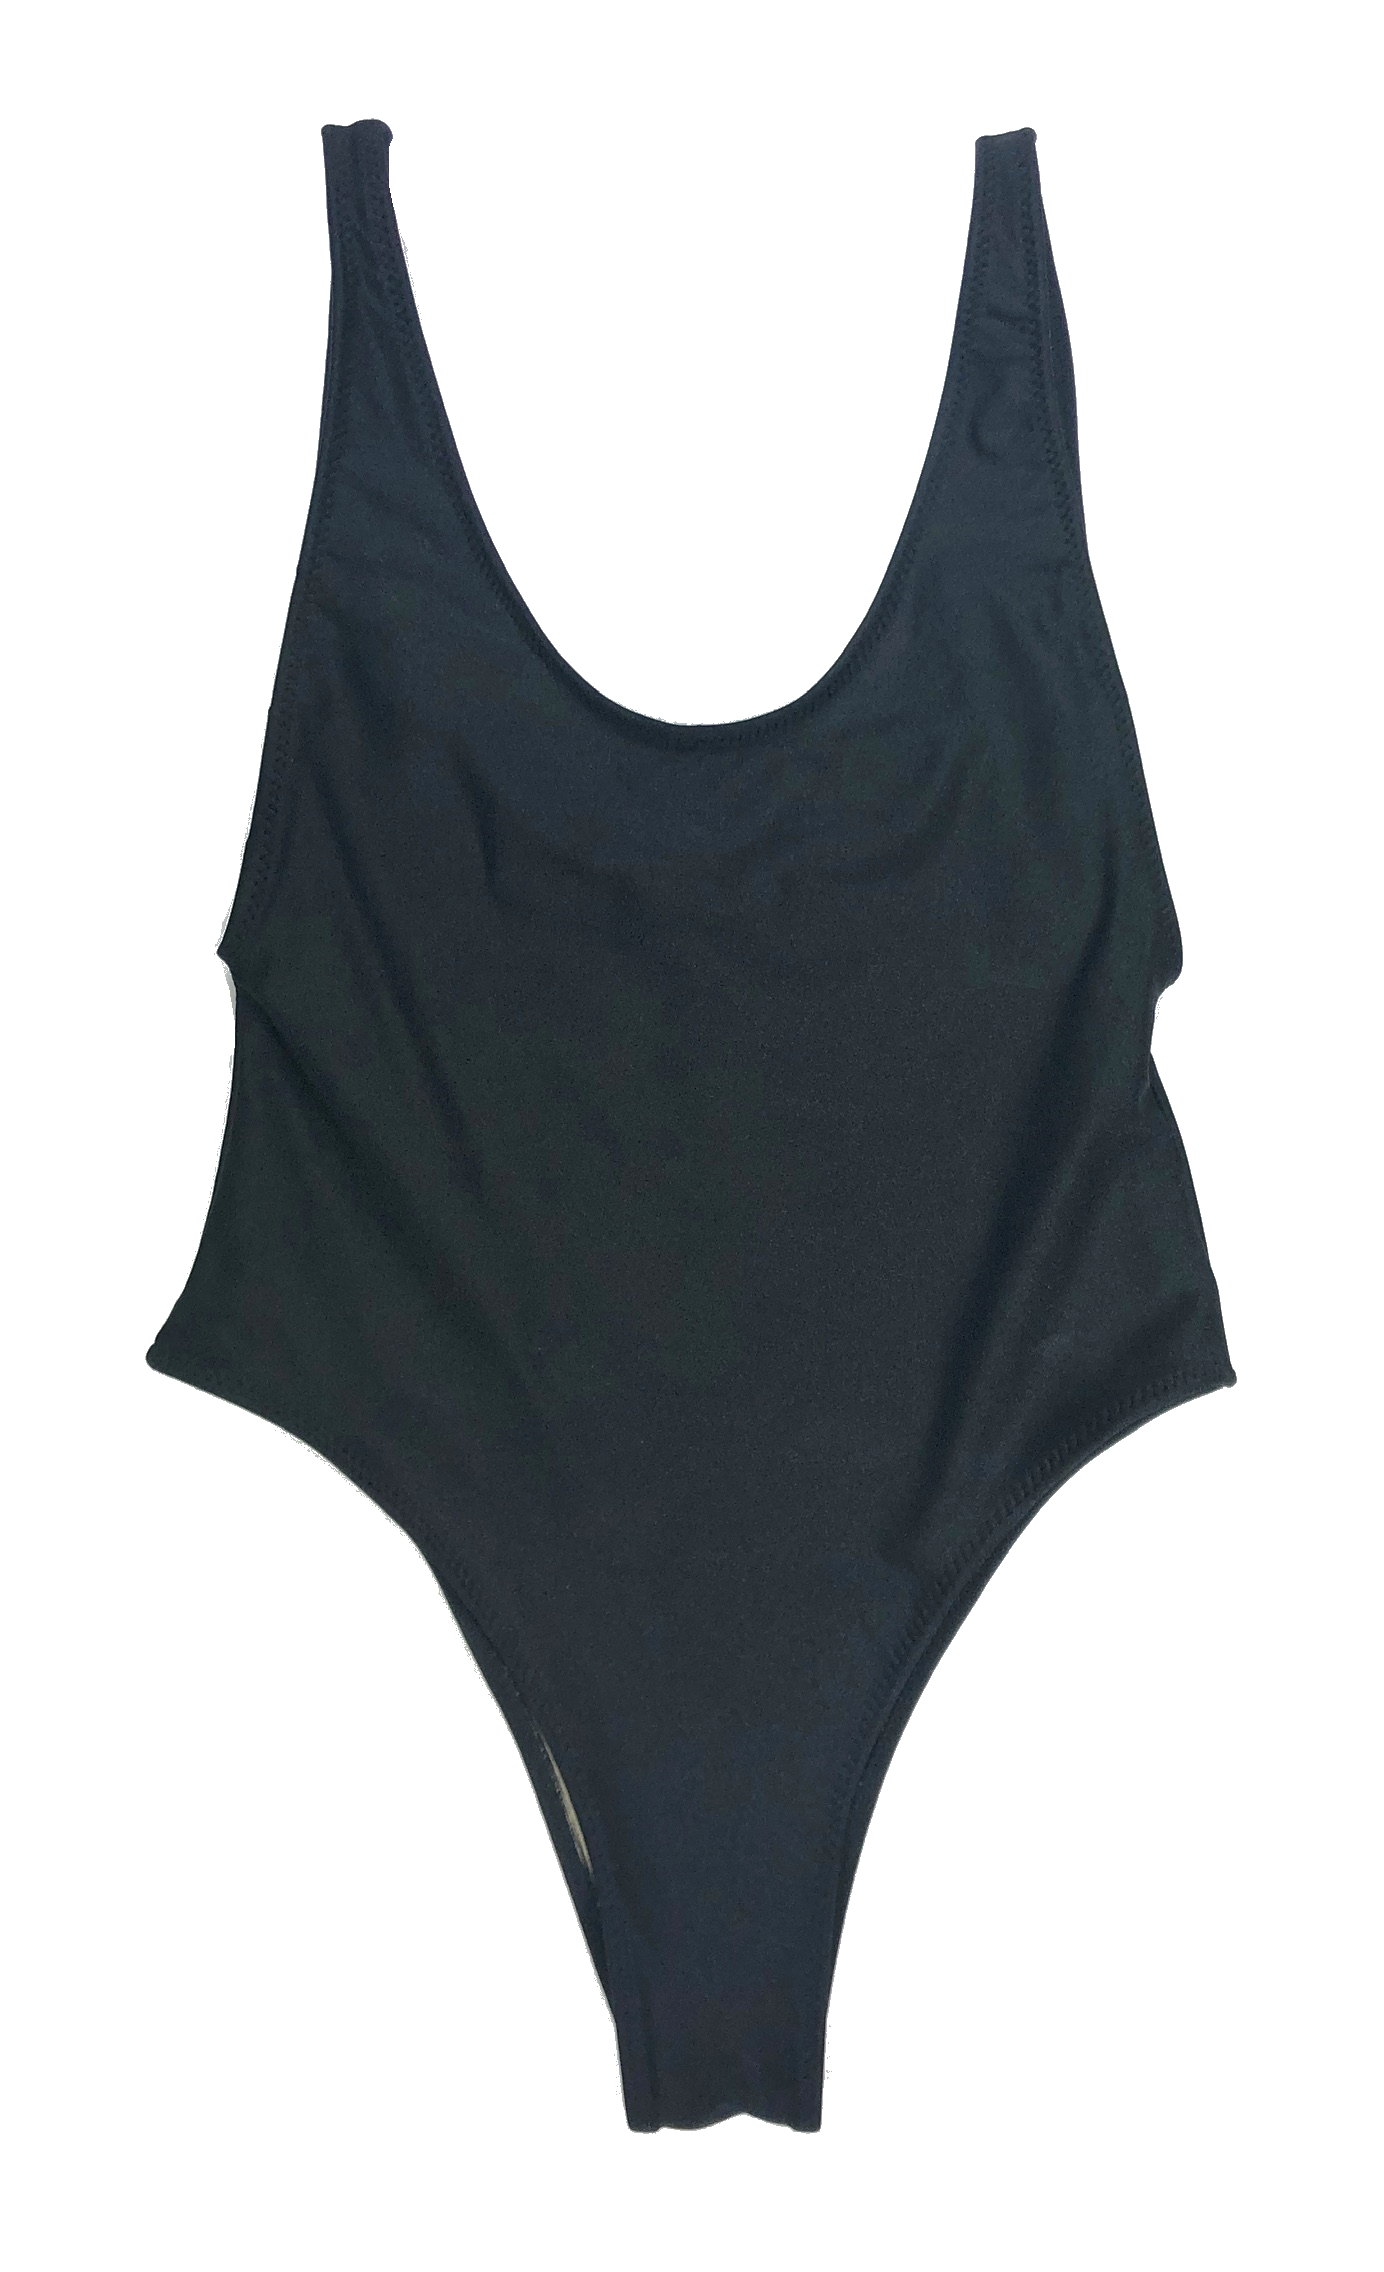 wendolin-designs - Wendolin Designs - Swimsuit - One Piece Swimsuit Color Black